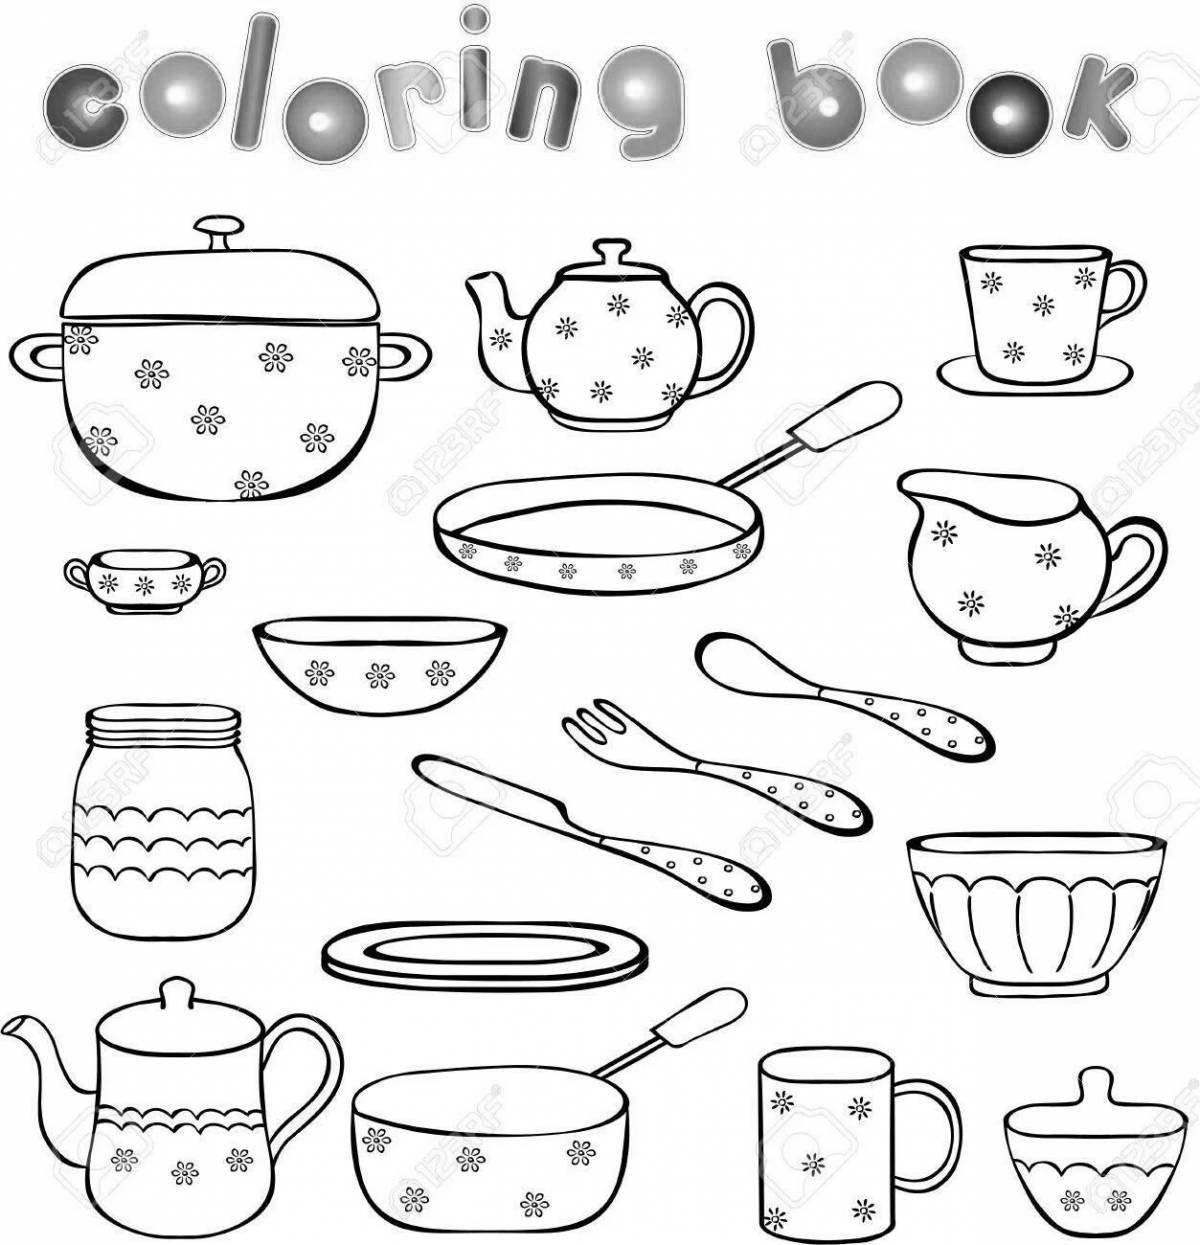 Exotic food coloring book